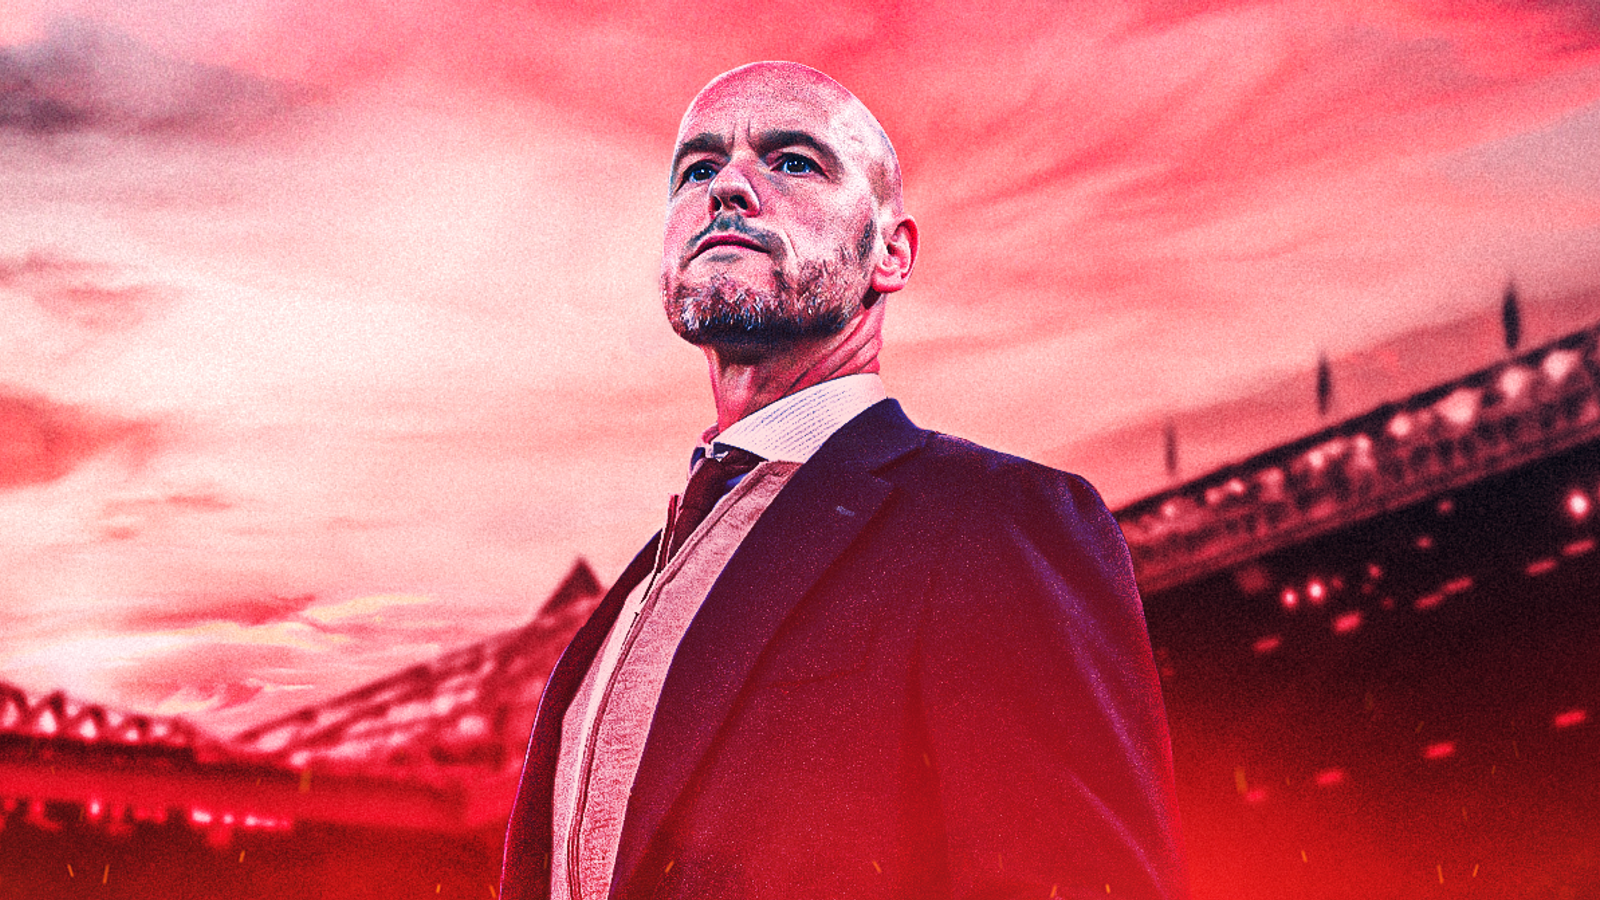 Erik ten Hag exclusive: Manchester United manager on Frenkie de Jong, an intense pre-season and more